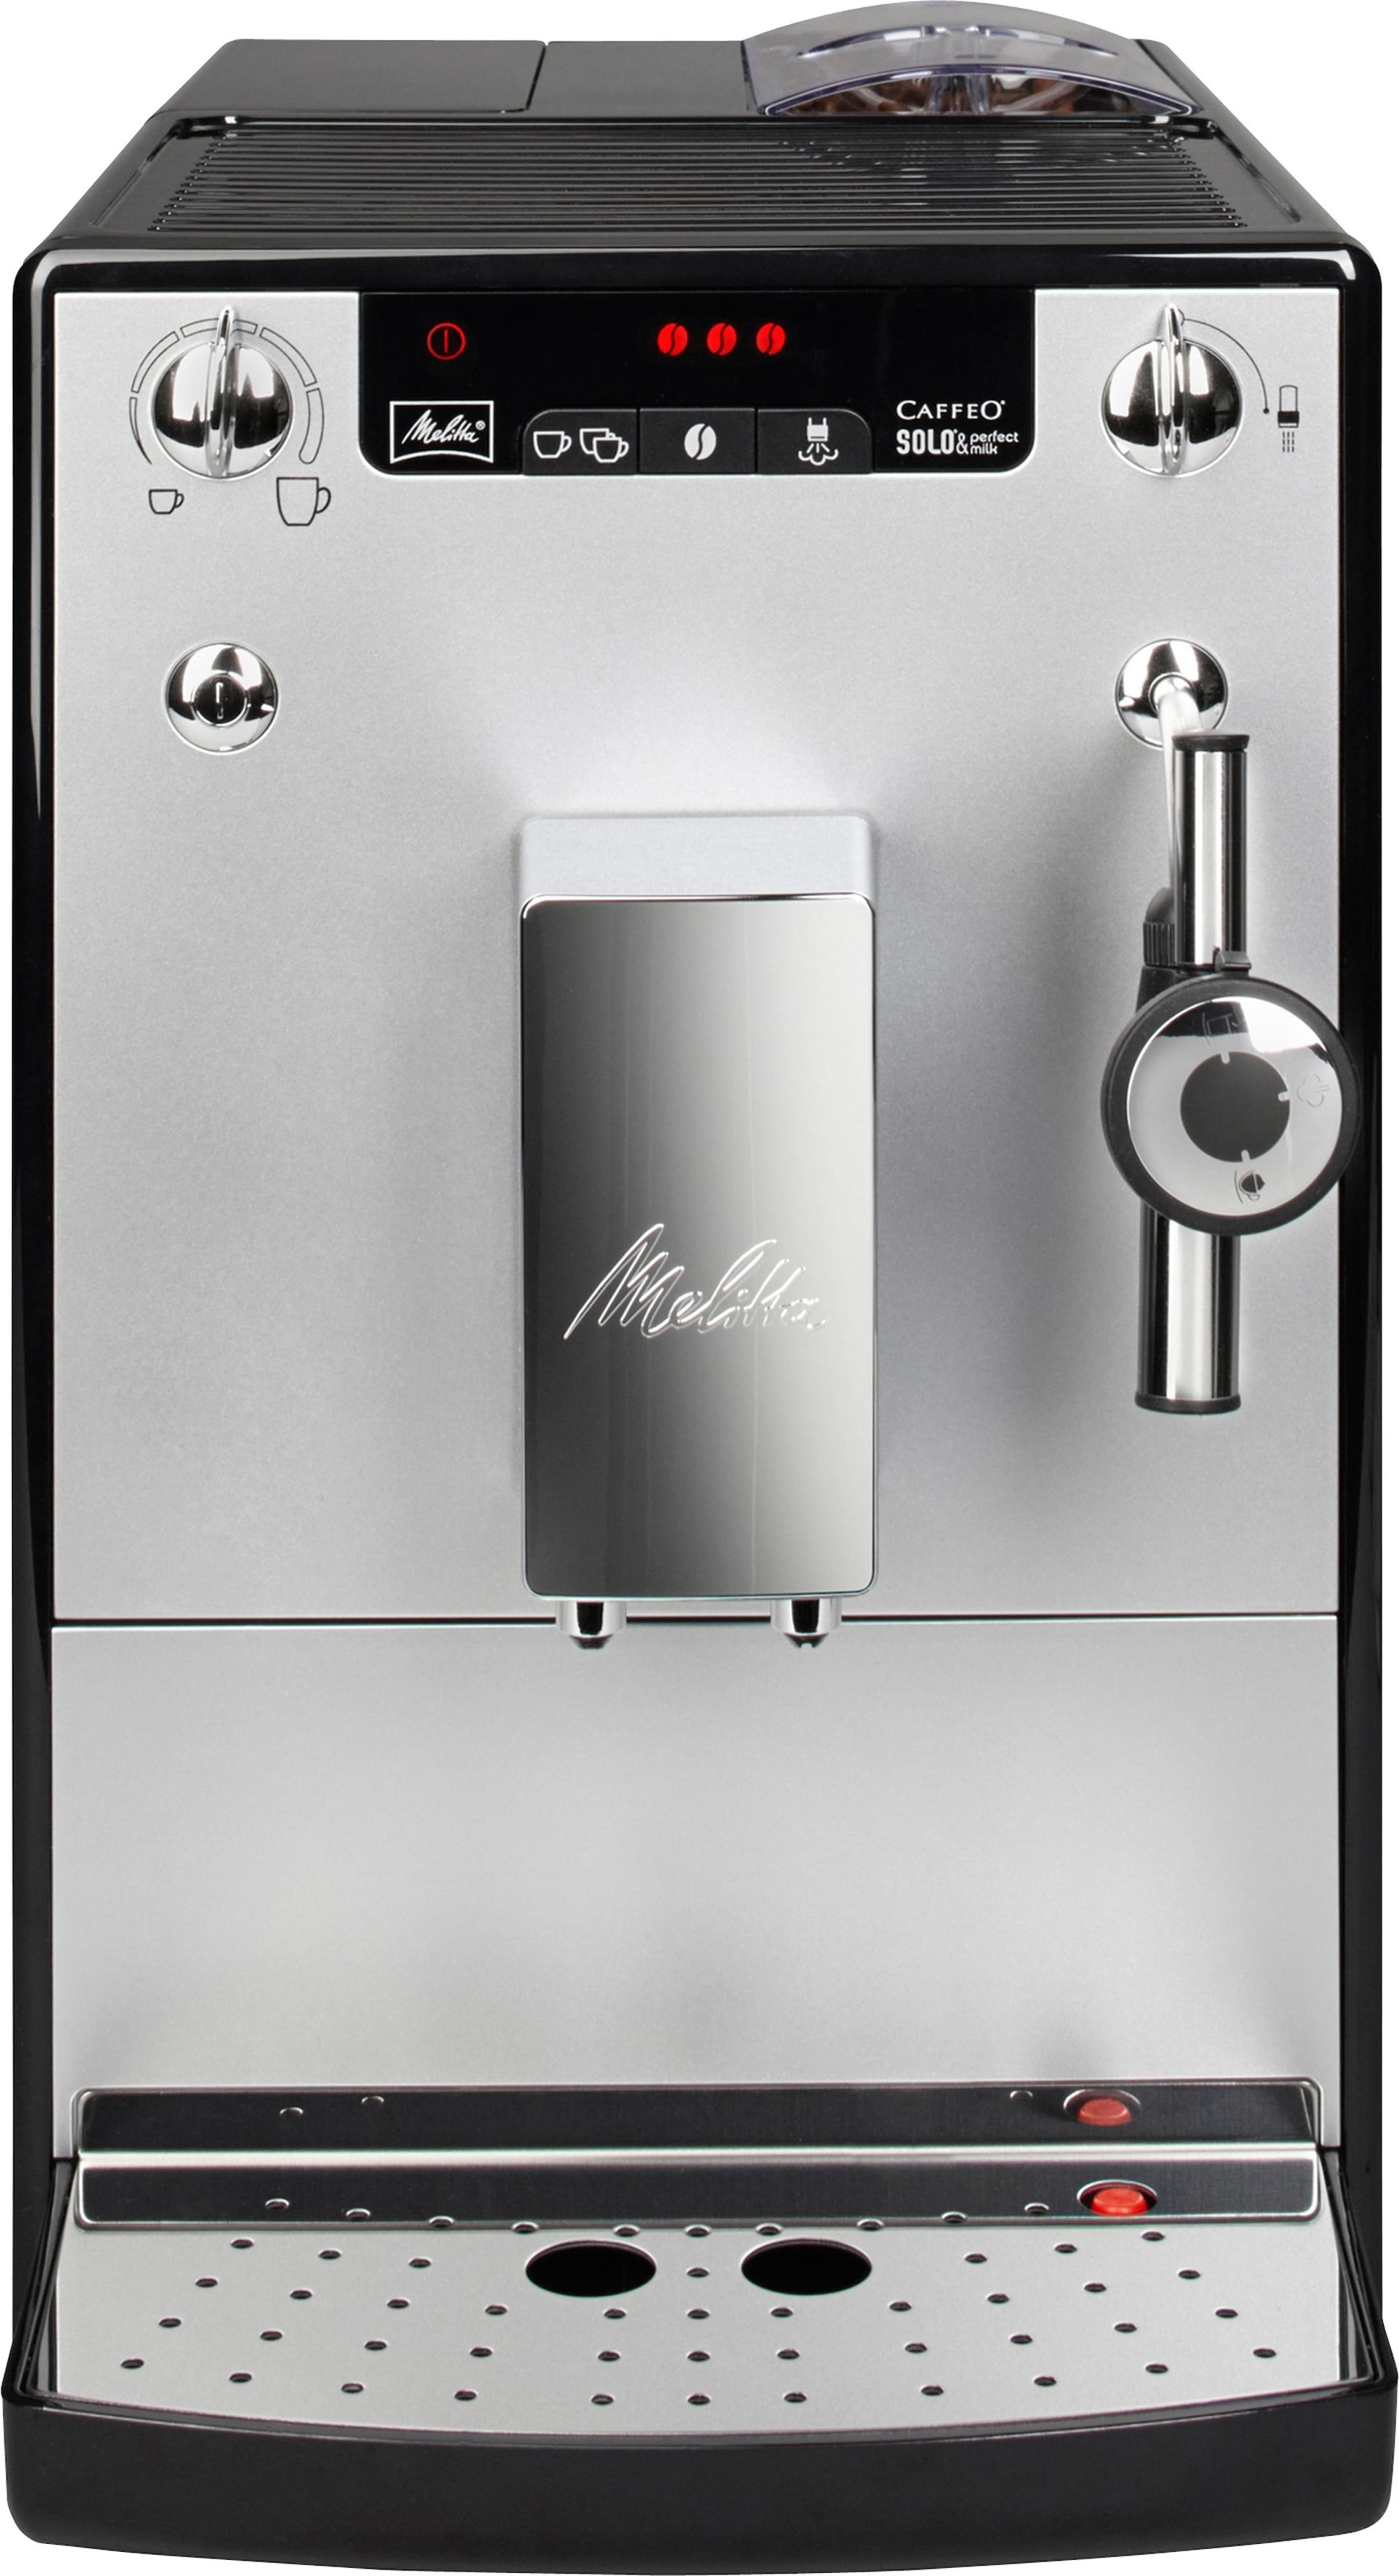 Melitta Kaffeevollautomat CAFFEO® Solo® & auf Rechnung Kegelmahlwerk Tank, 1,2l kaufen Milk E957-103, Perfect